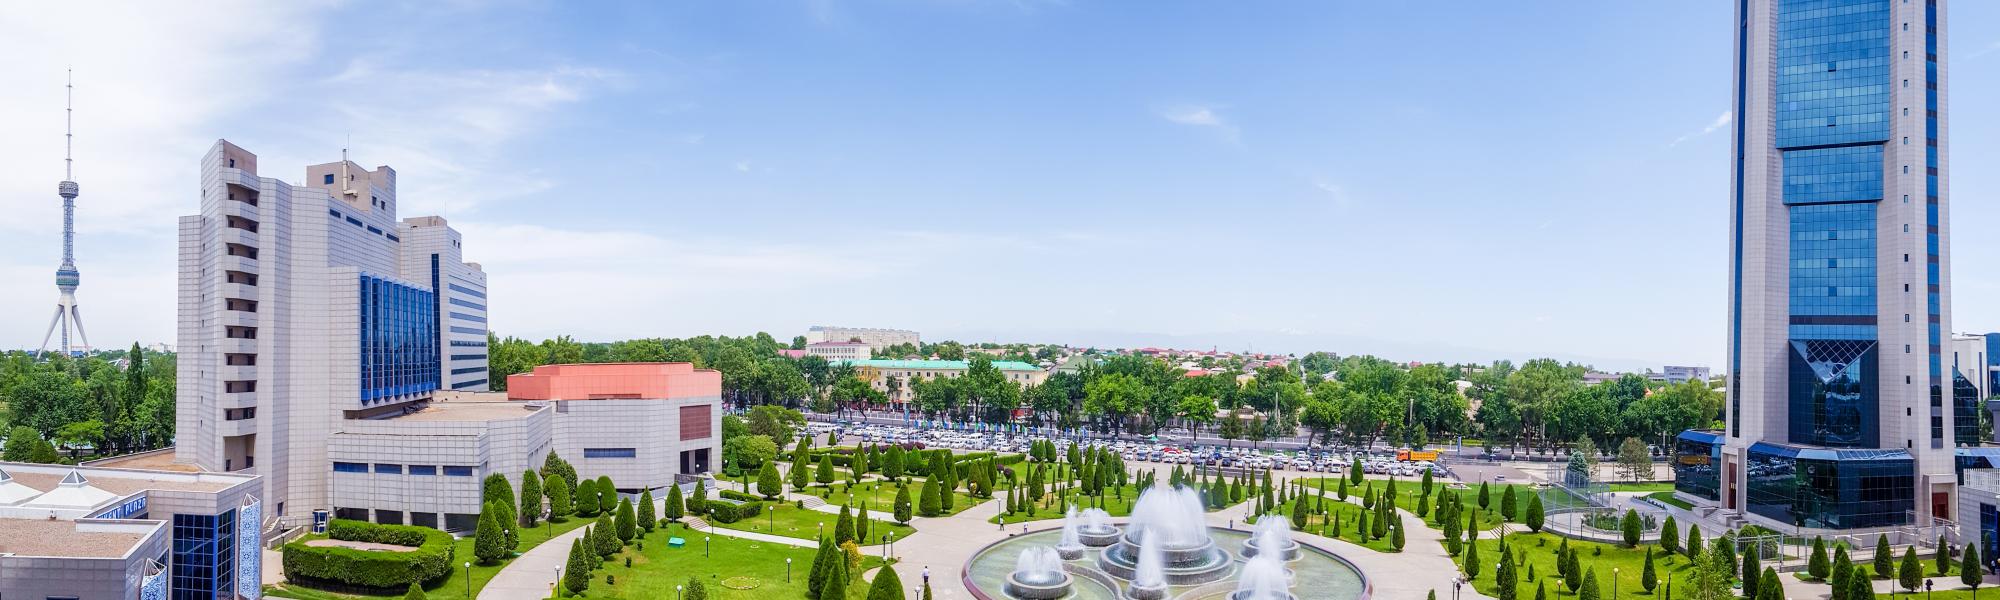 tashkent_city